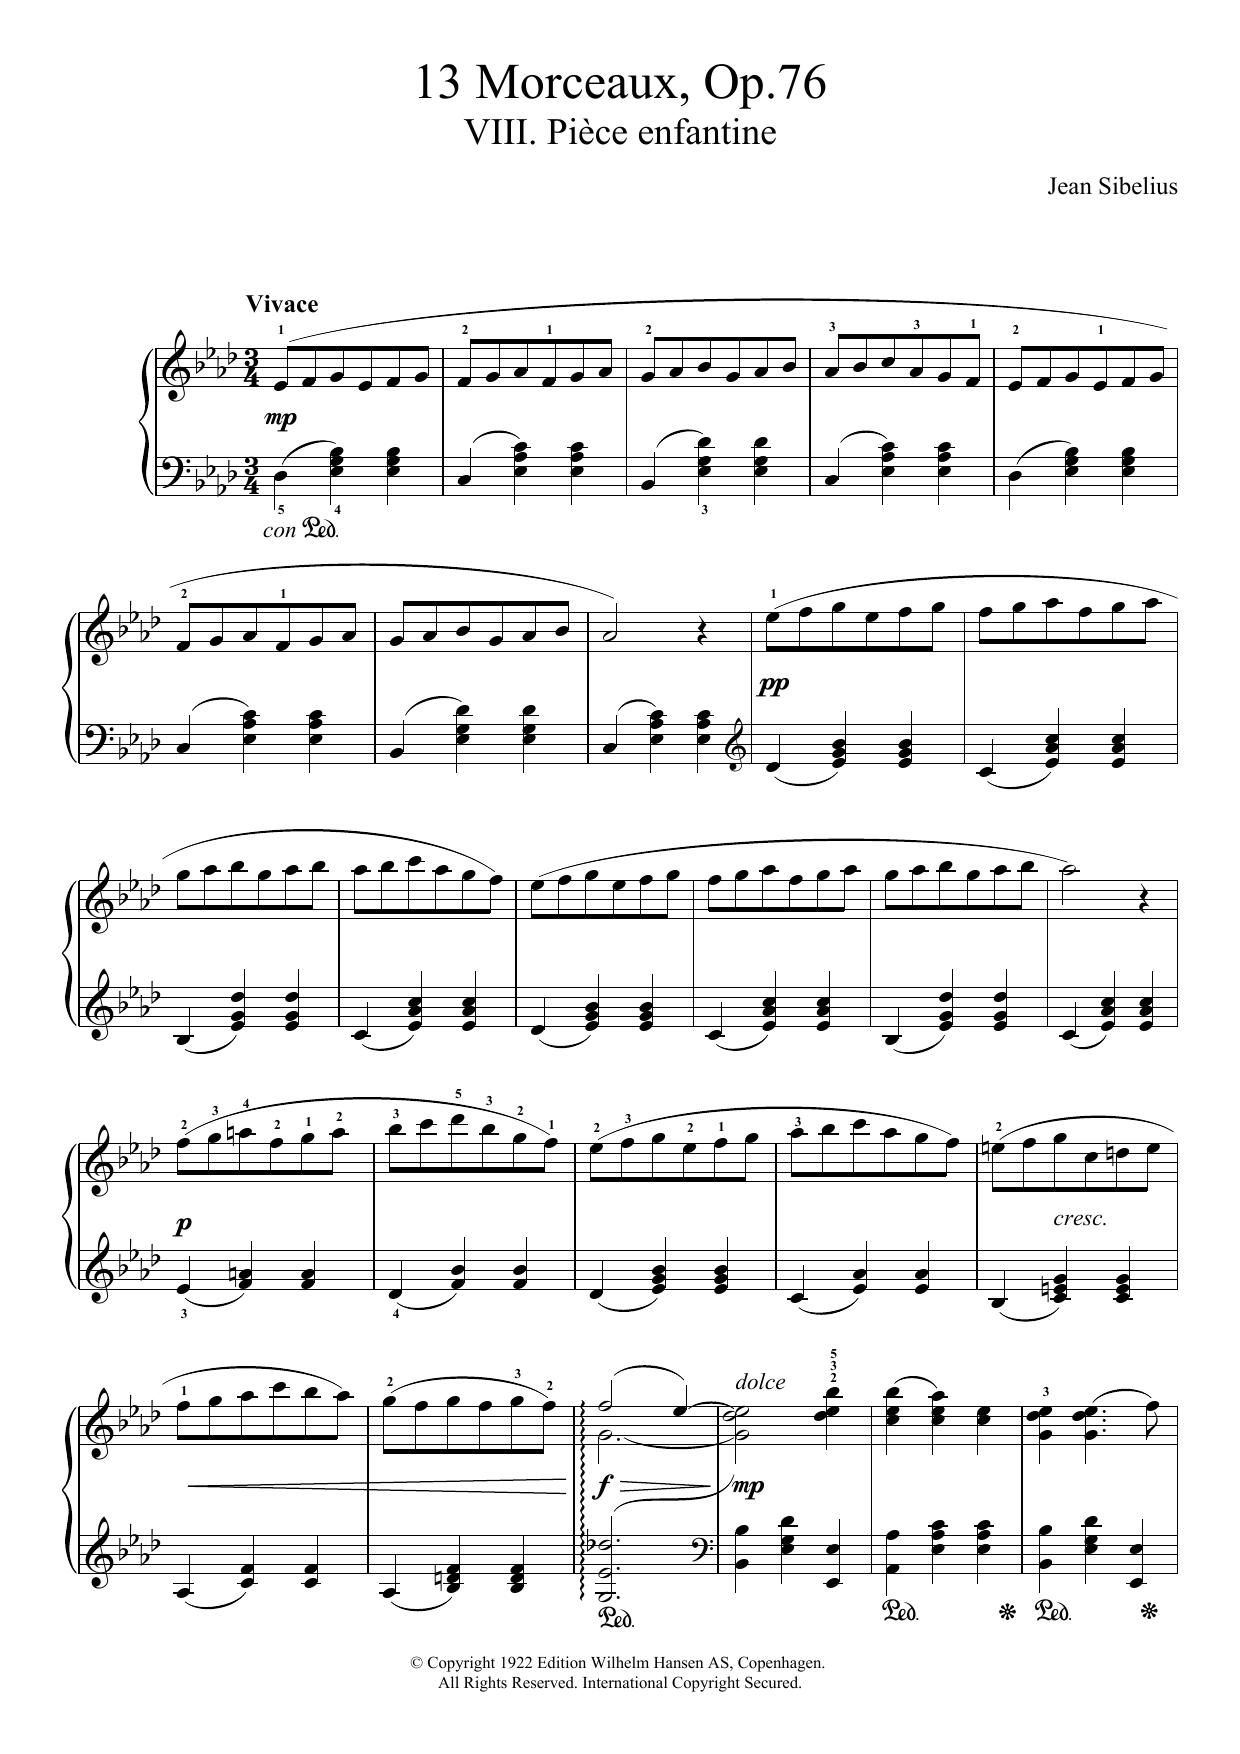 Download Jean Sibelius 13 Morceaux, Op.76 - VIII. Pièce Enfan Sheet Music